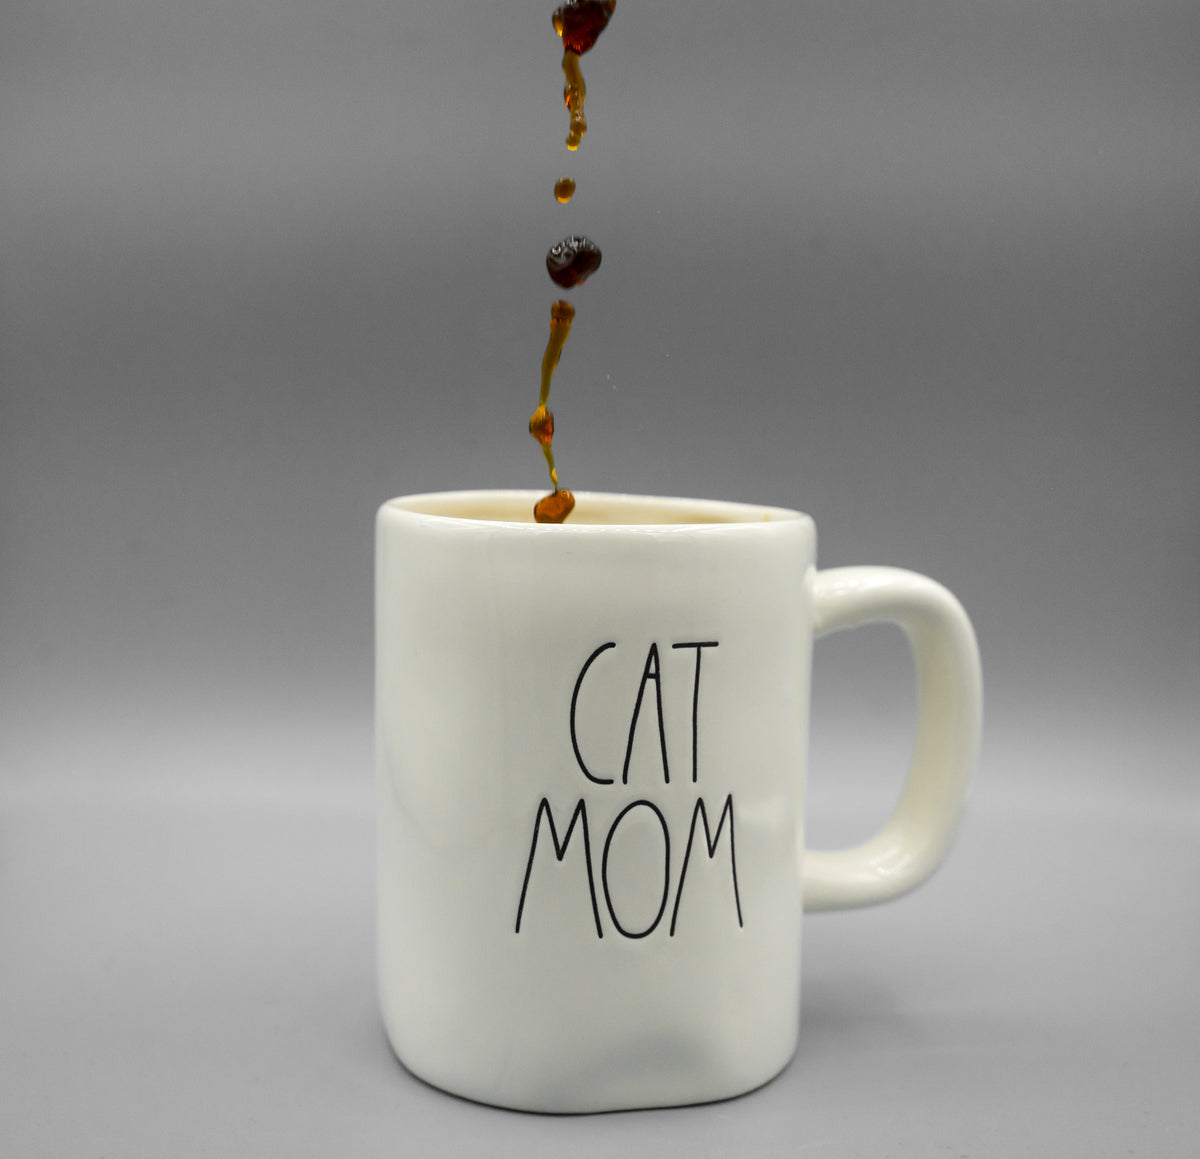 "cat mom" coffee mug